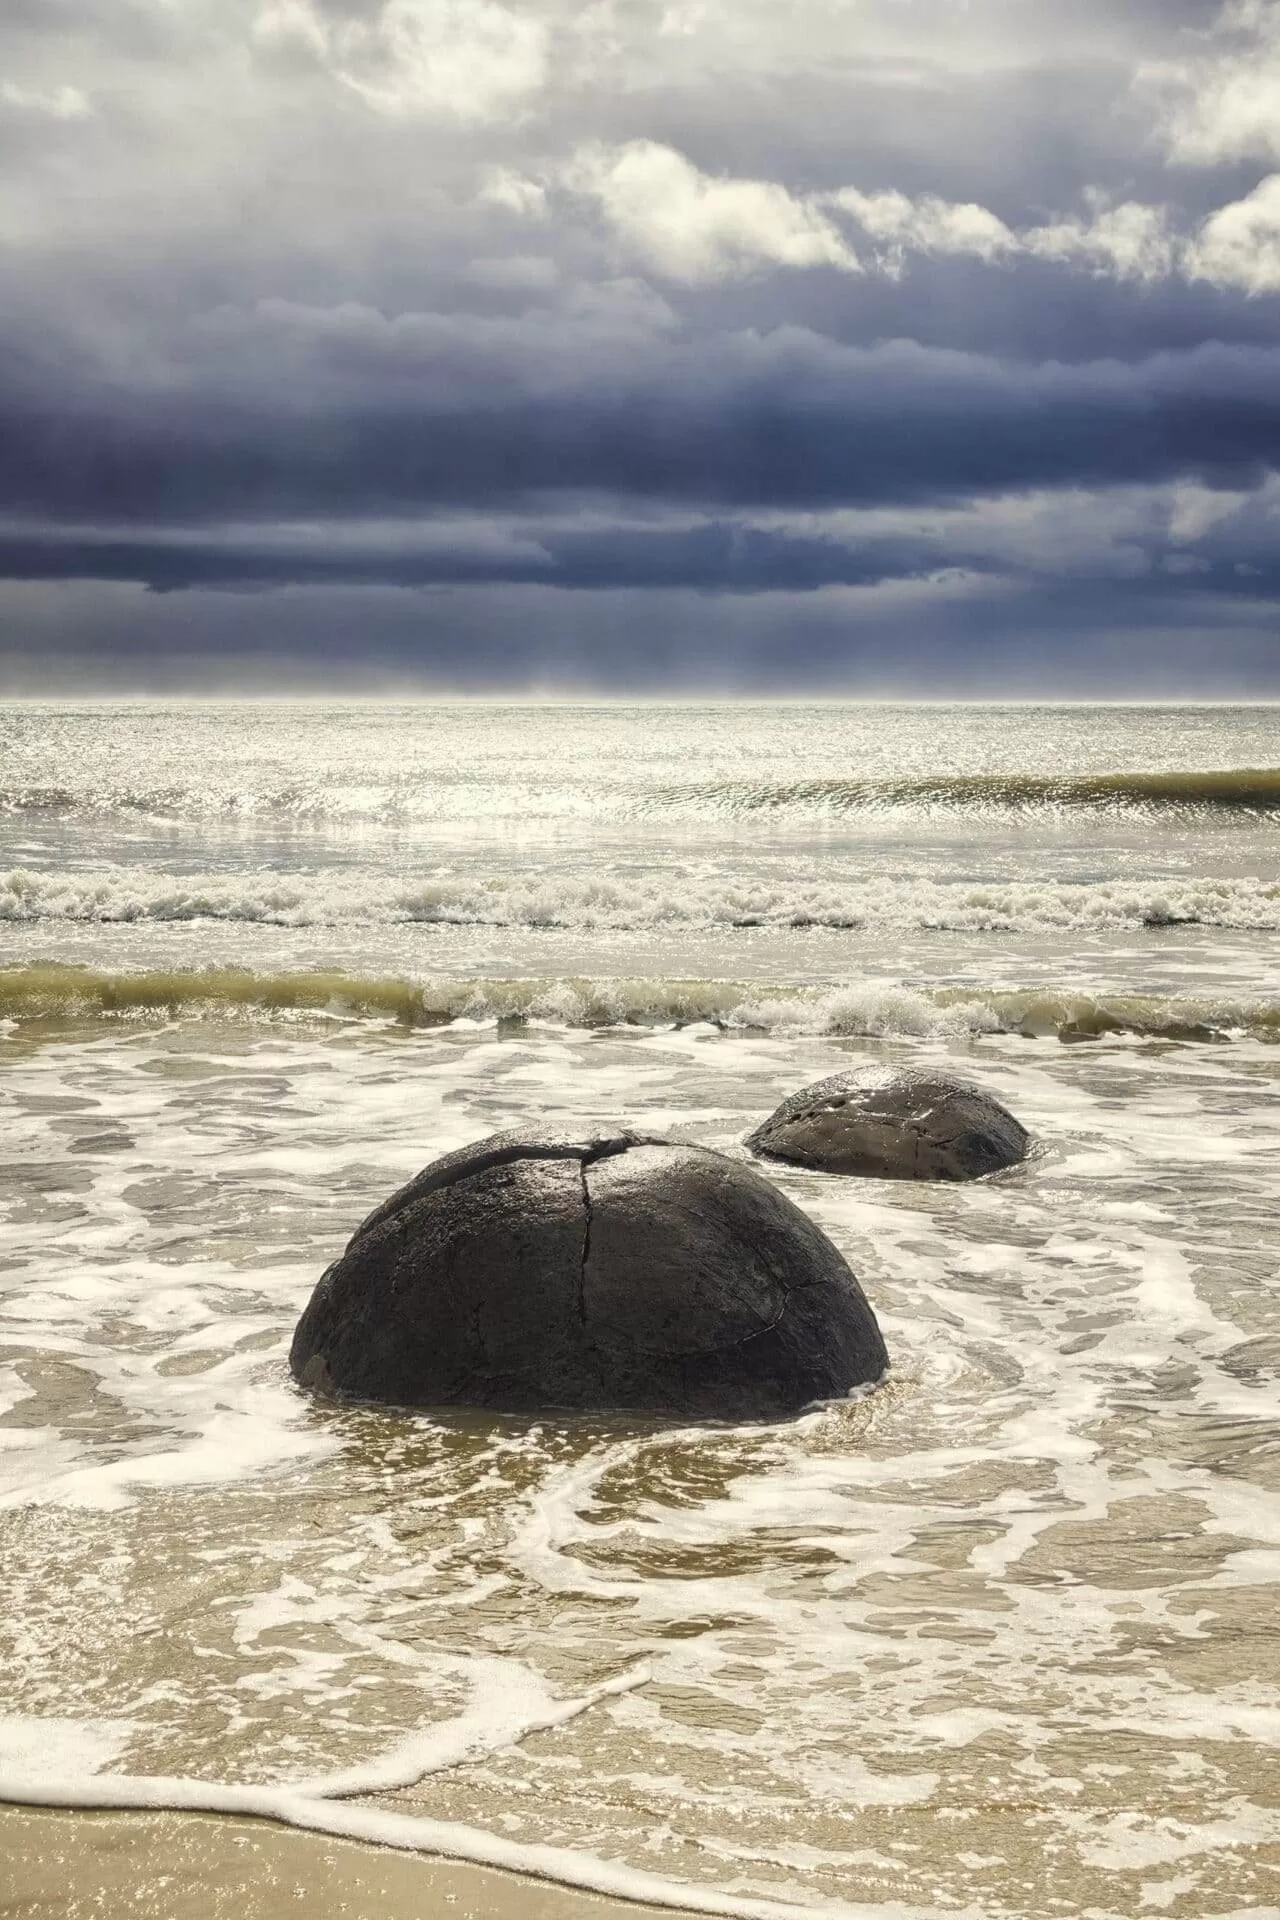 Stormy weather at Moeraki boulders beach